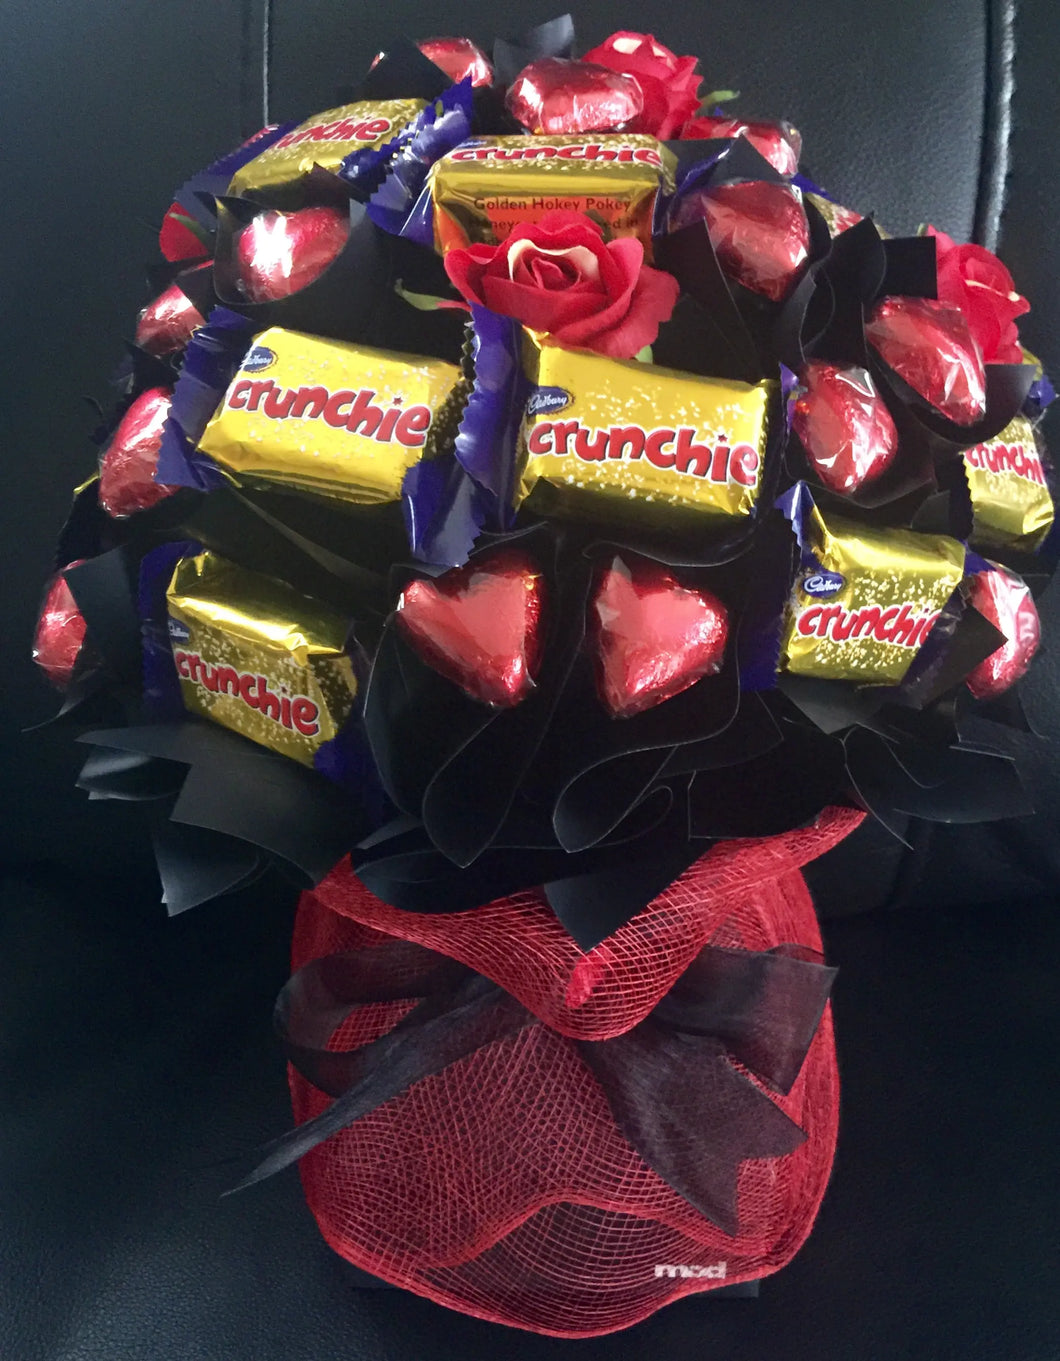 celebration chocolate bouquet - ferreros no hearts - Image #1